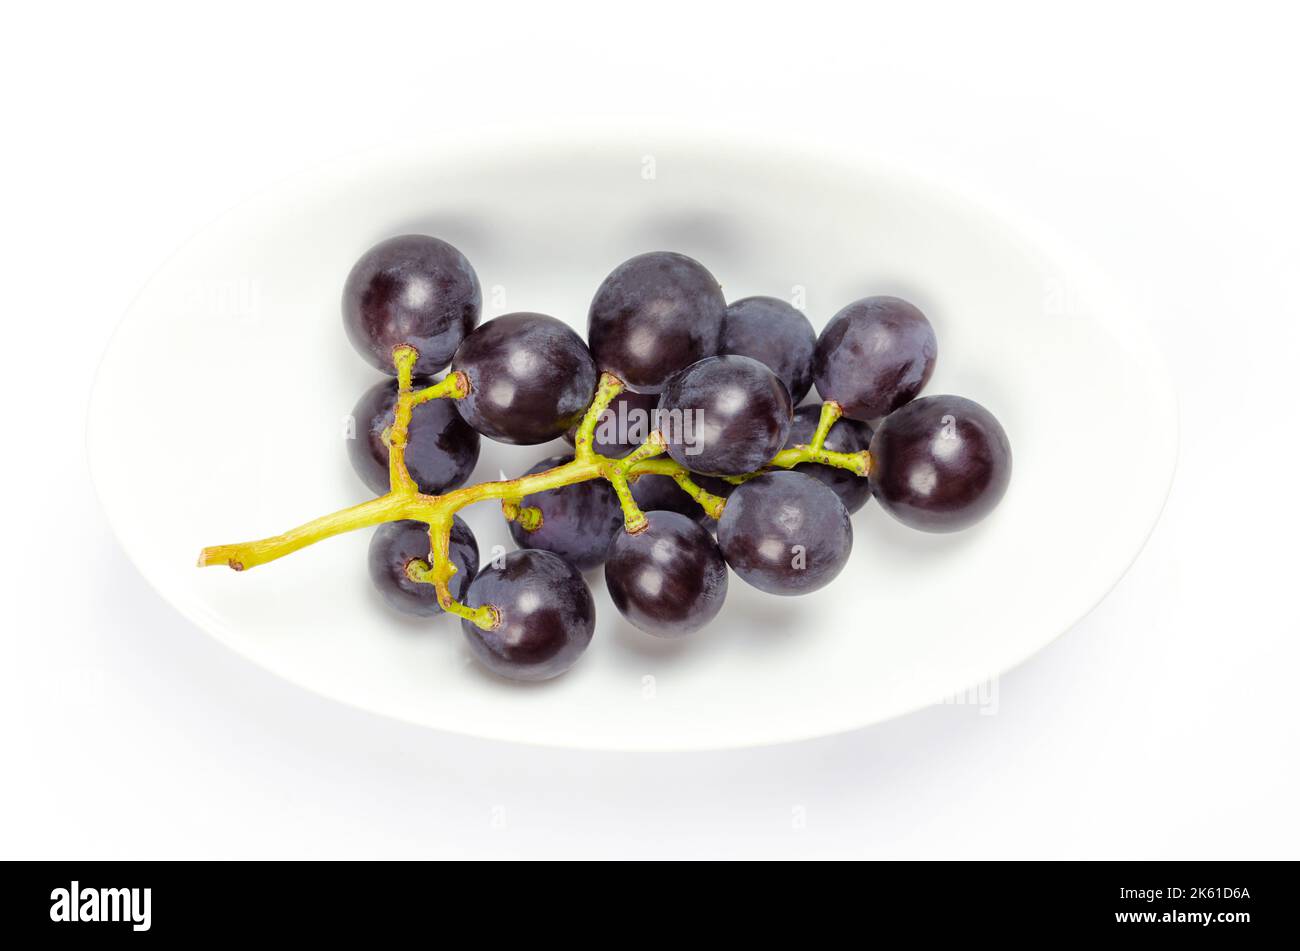 Common grape vines, in a white bowl. Freshly picked vines of ripe wild grapes, Vitis vinifera, with small dark purple grapes. Stock Photo